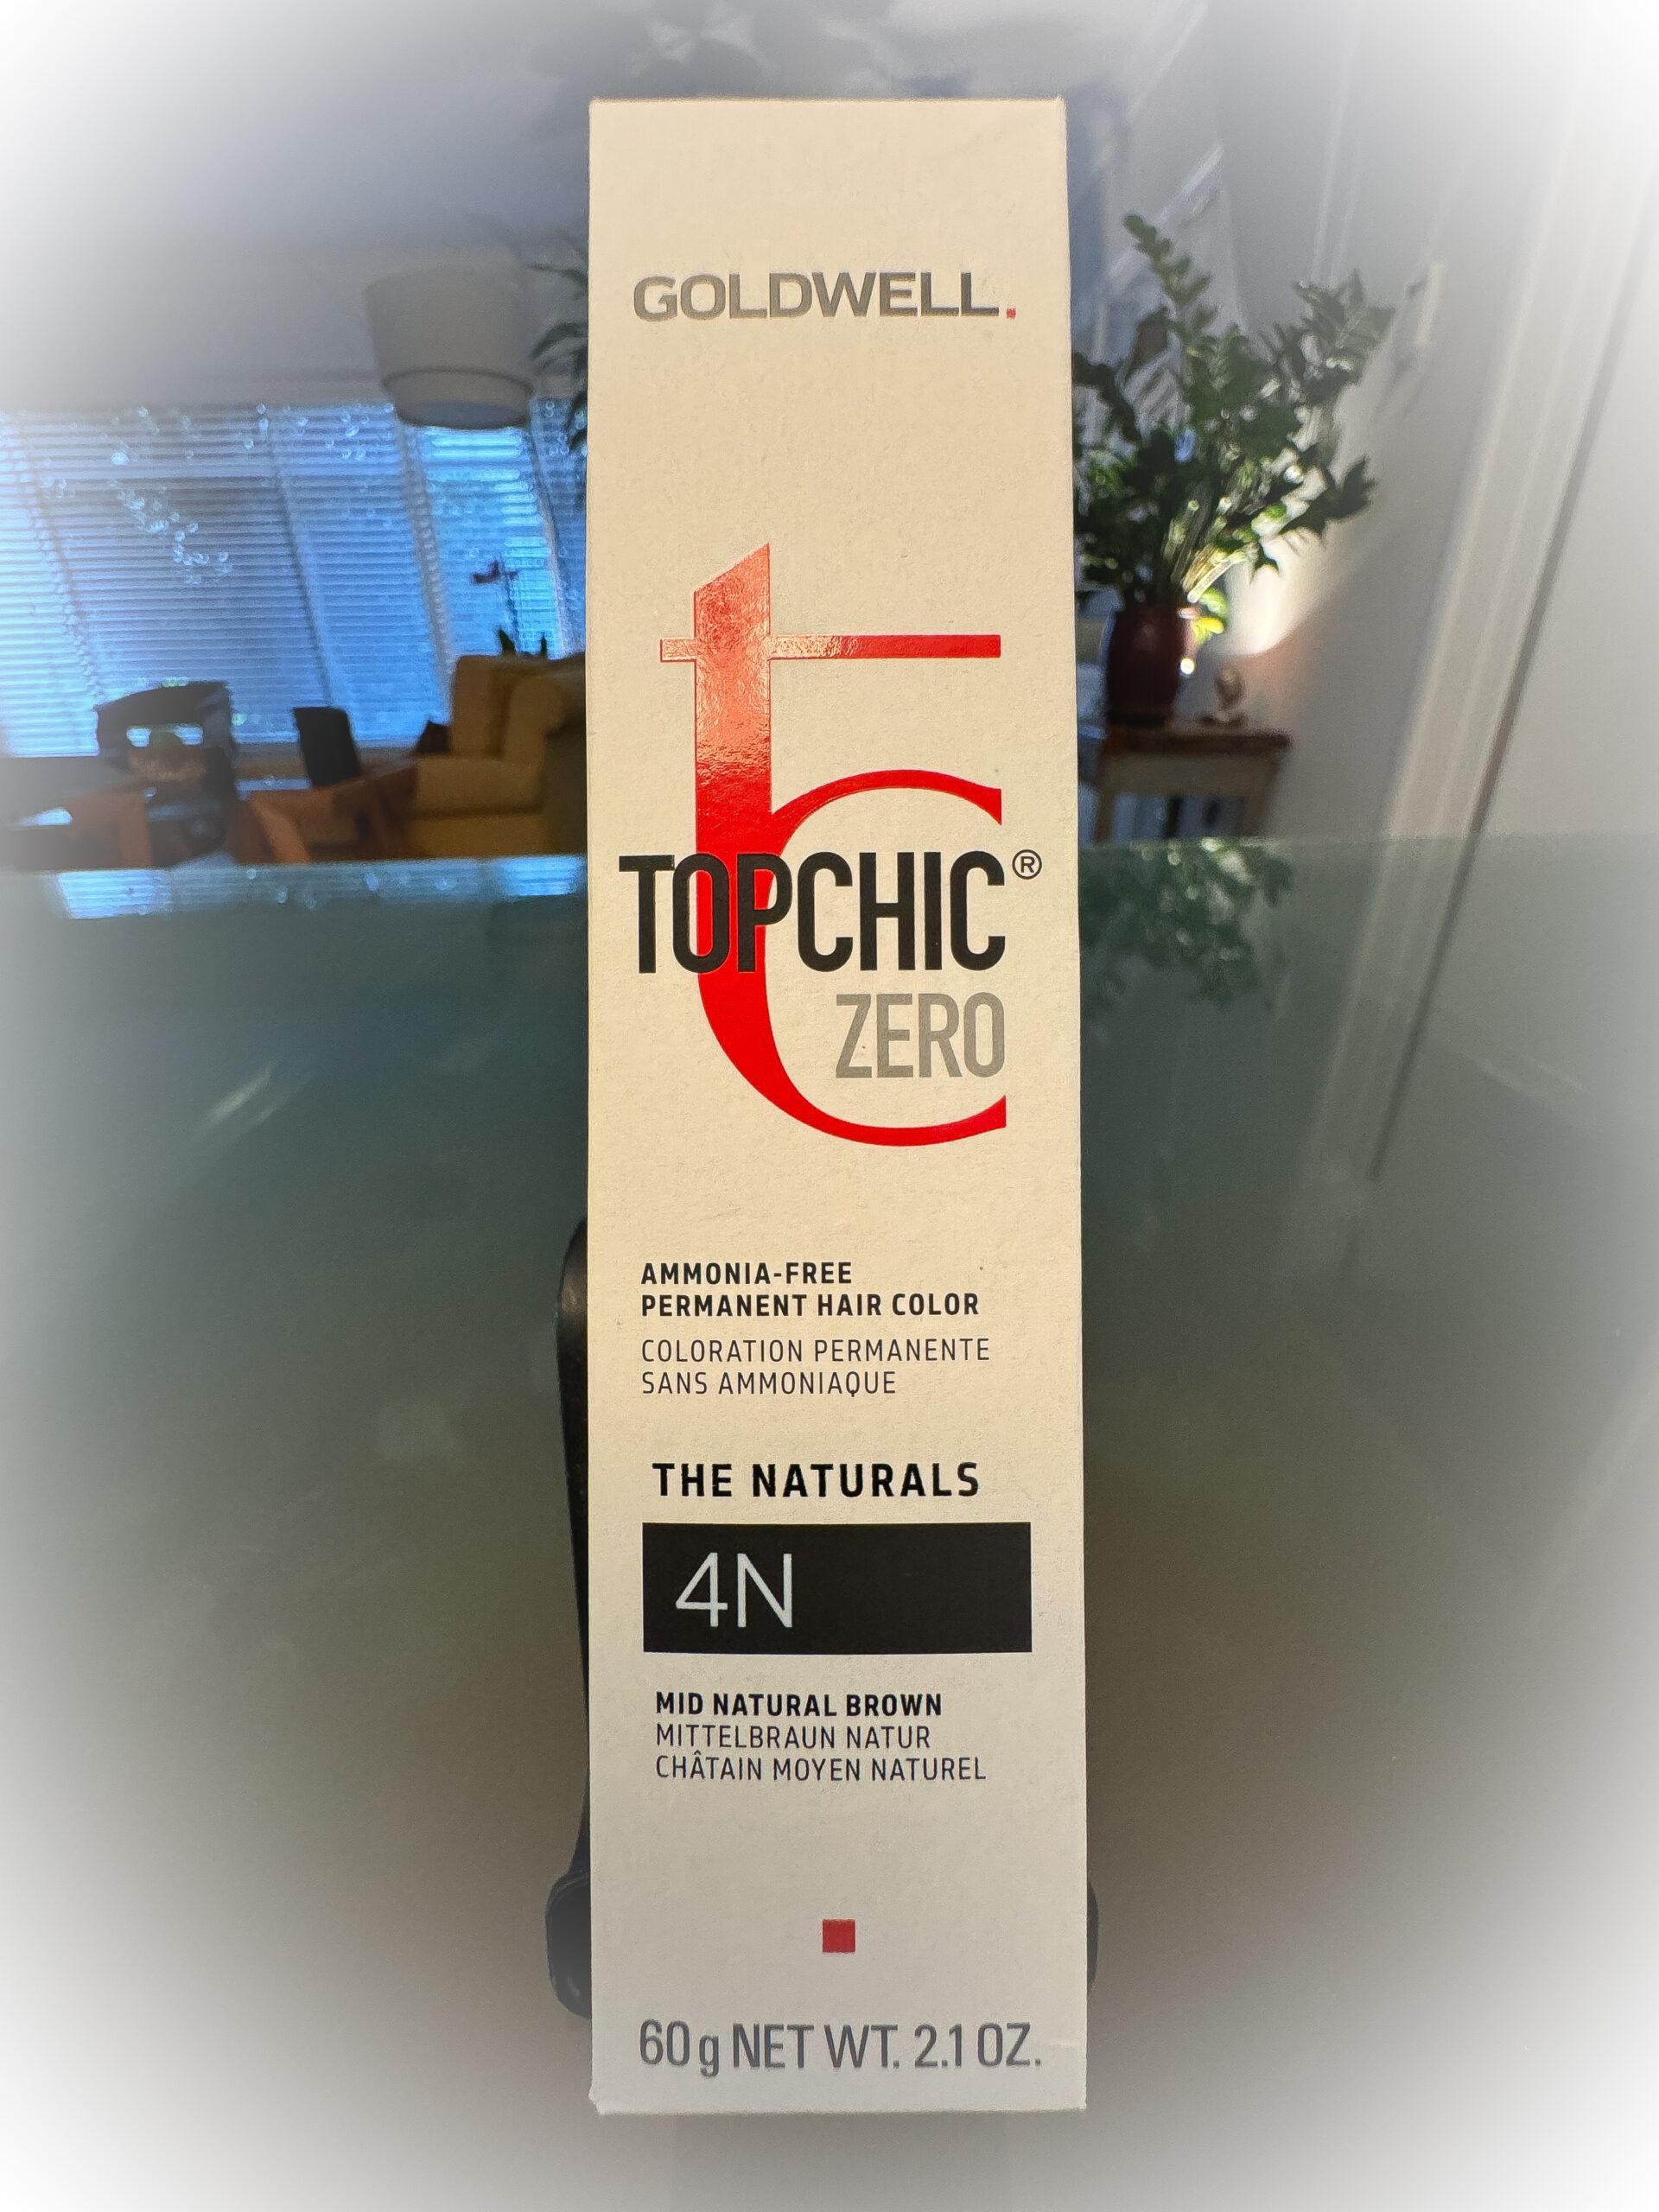 Topchic Zero ammonia free, silicone free, ethanol free hair color